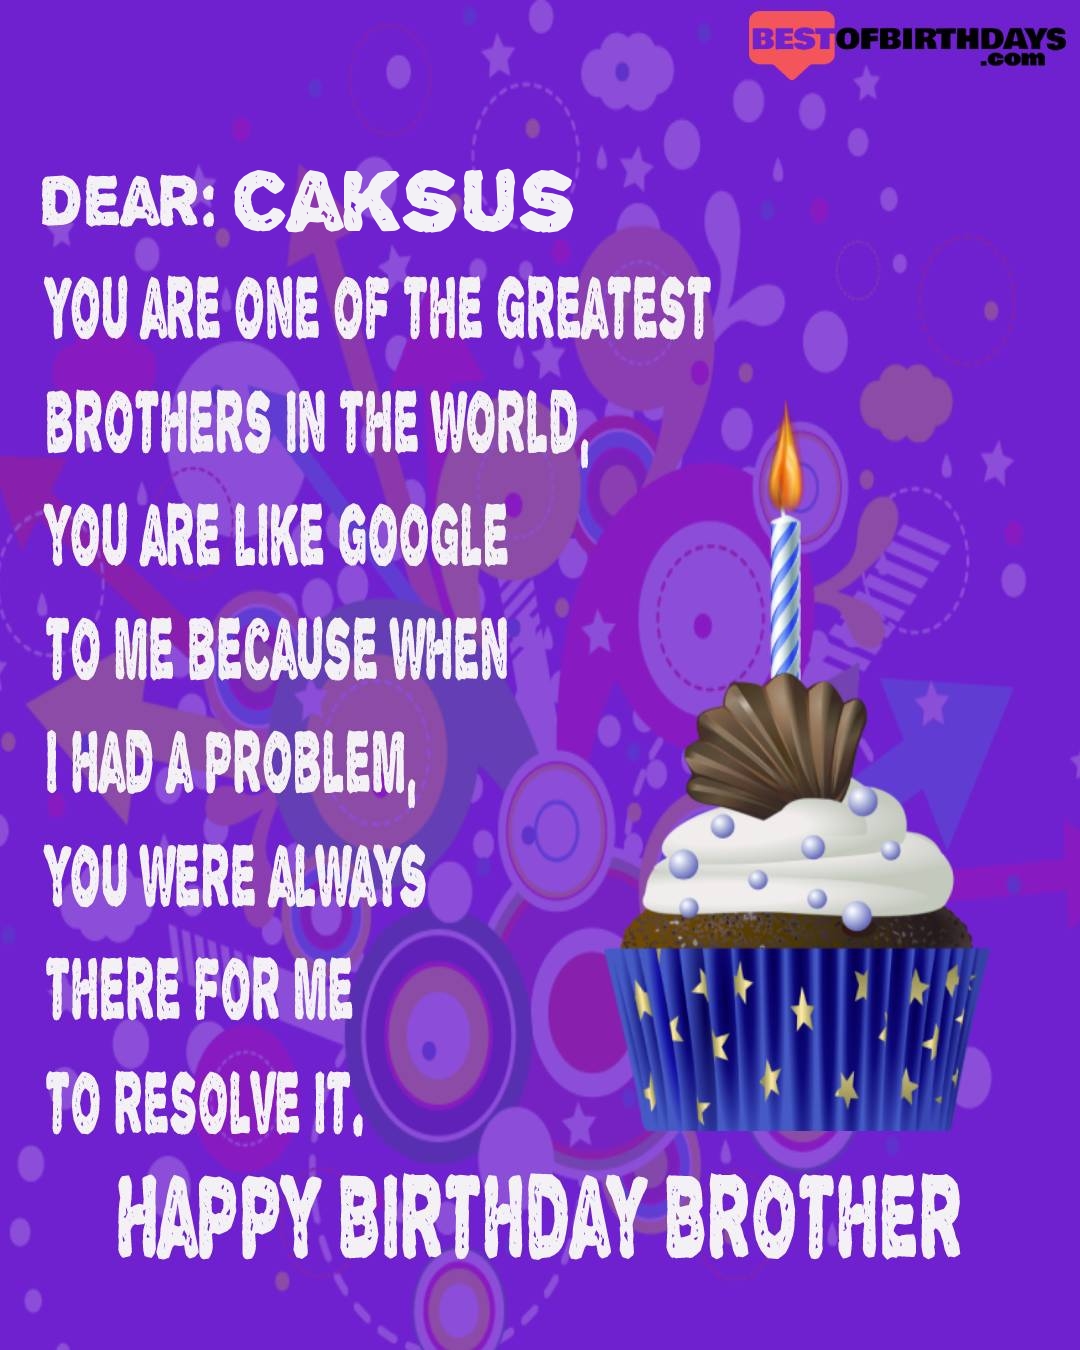 Happy birthday caksus bhai brother bro